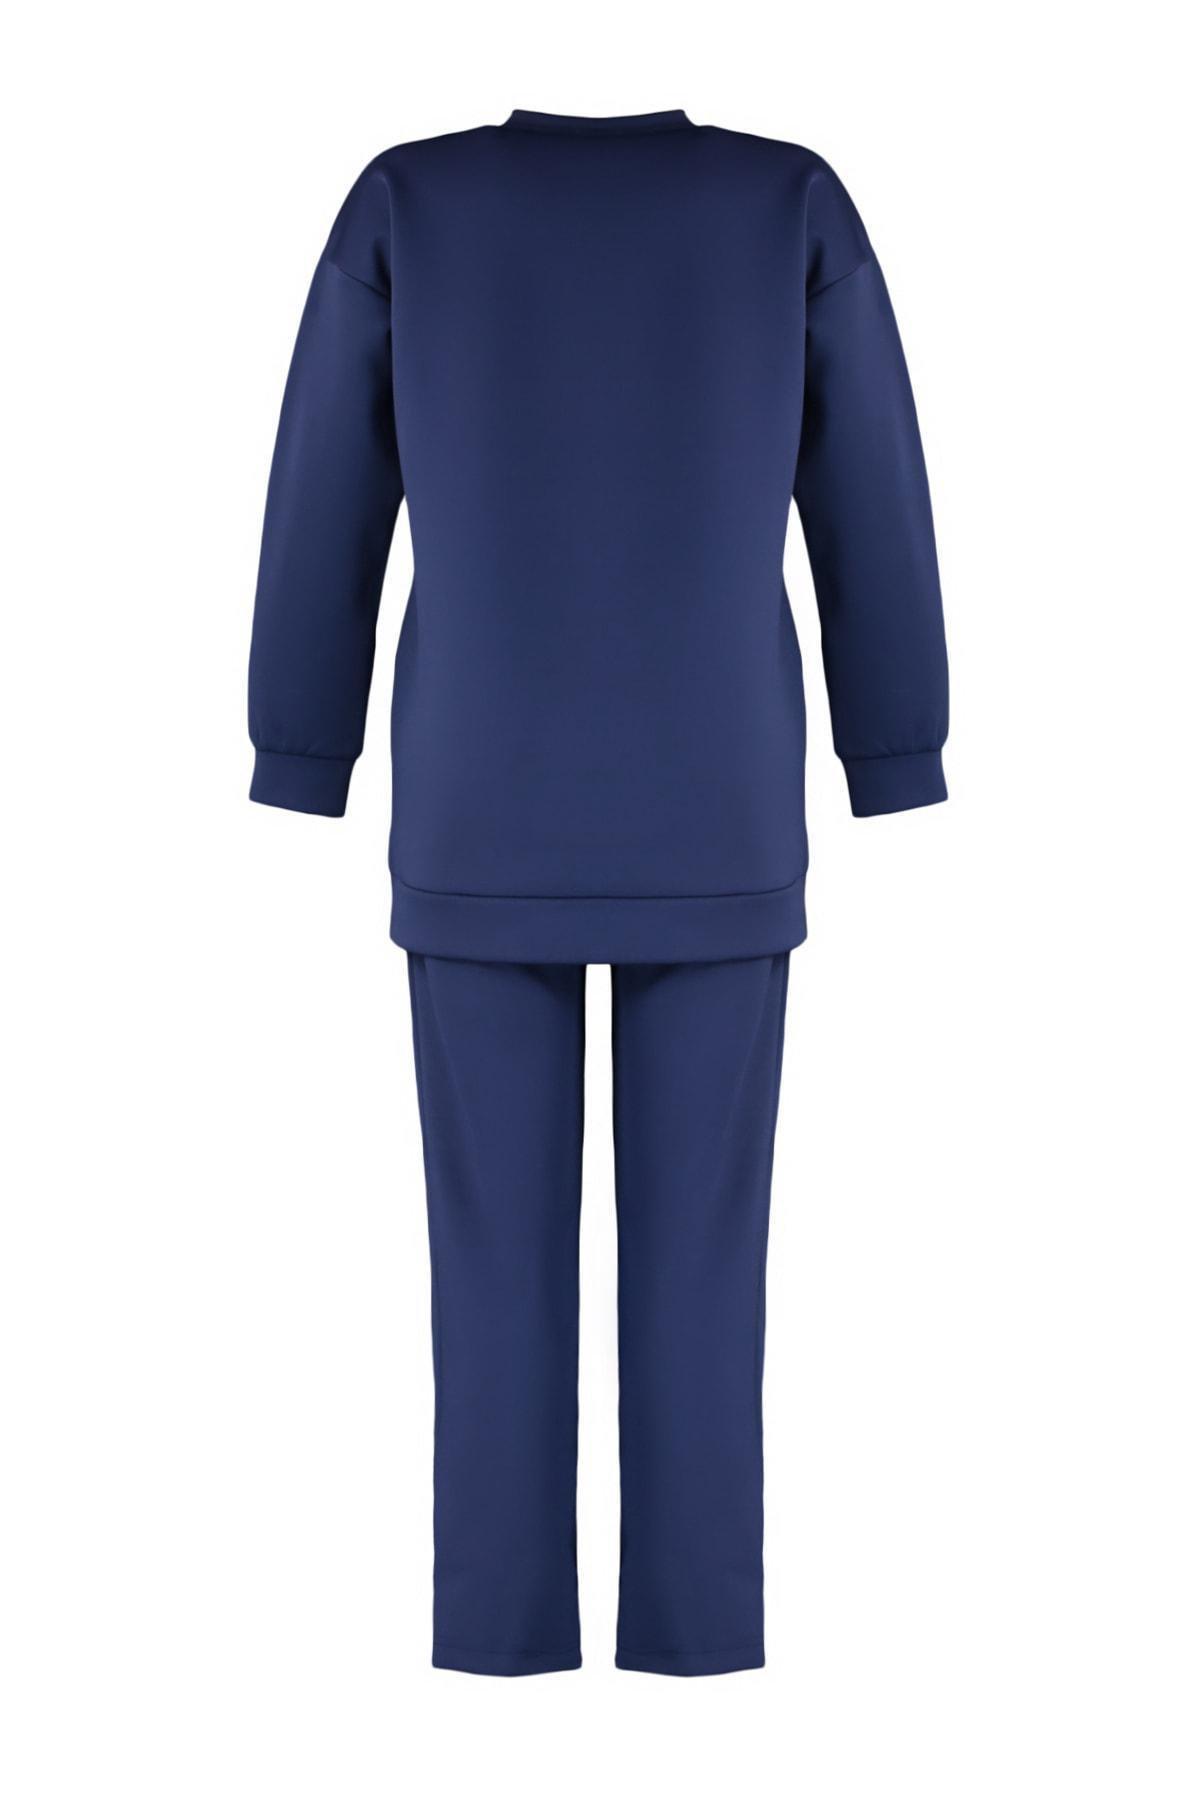 Trendyol - Navy Graphic Sweatsuit Co-Ord Set